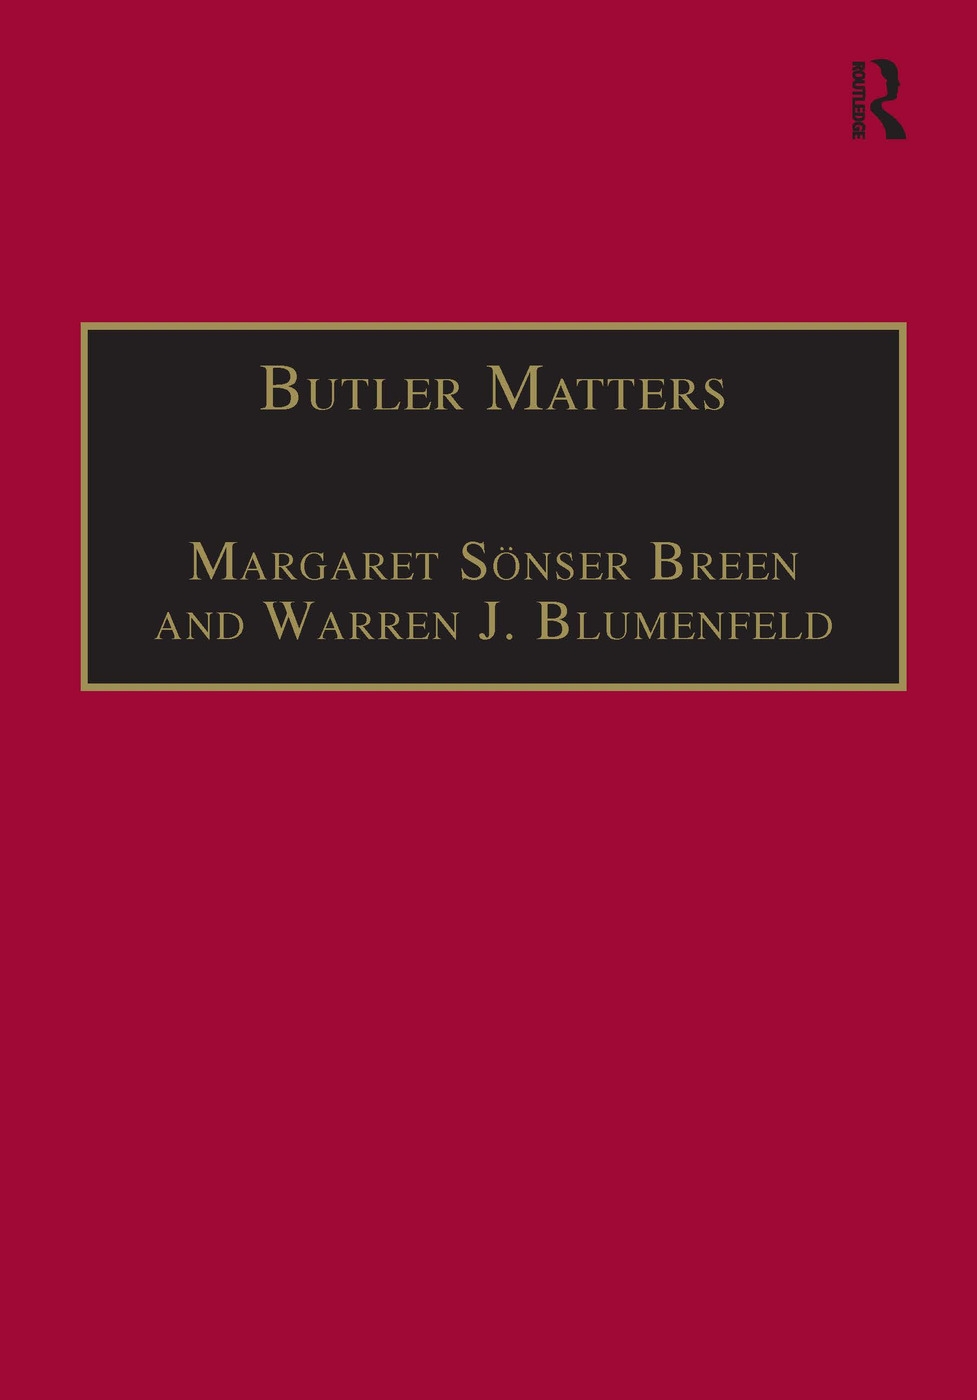 Butler Matters: Judith Butler’s Impact on Feminist and Queer Studies